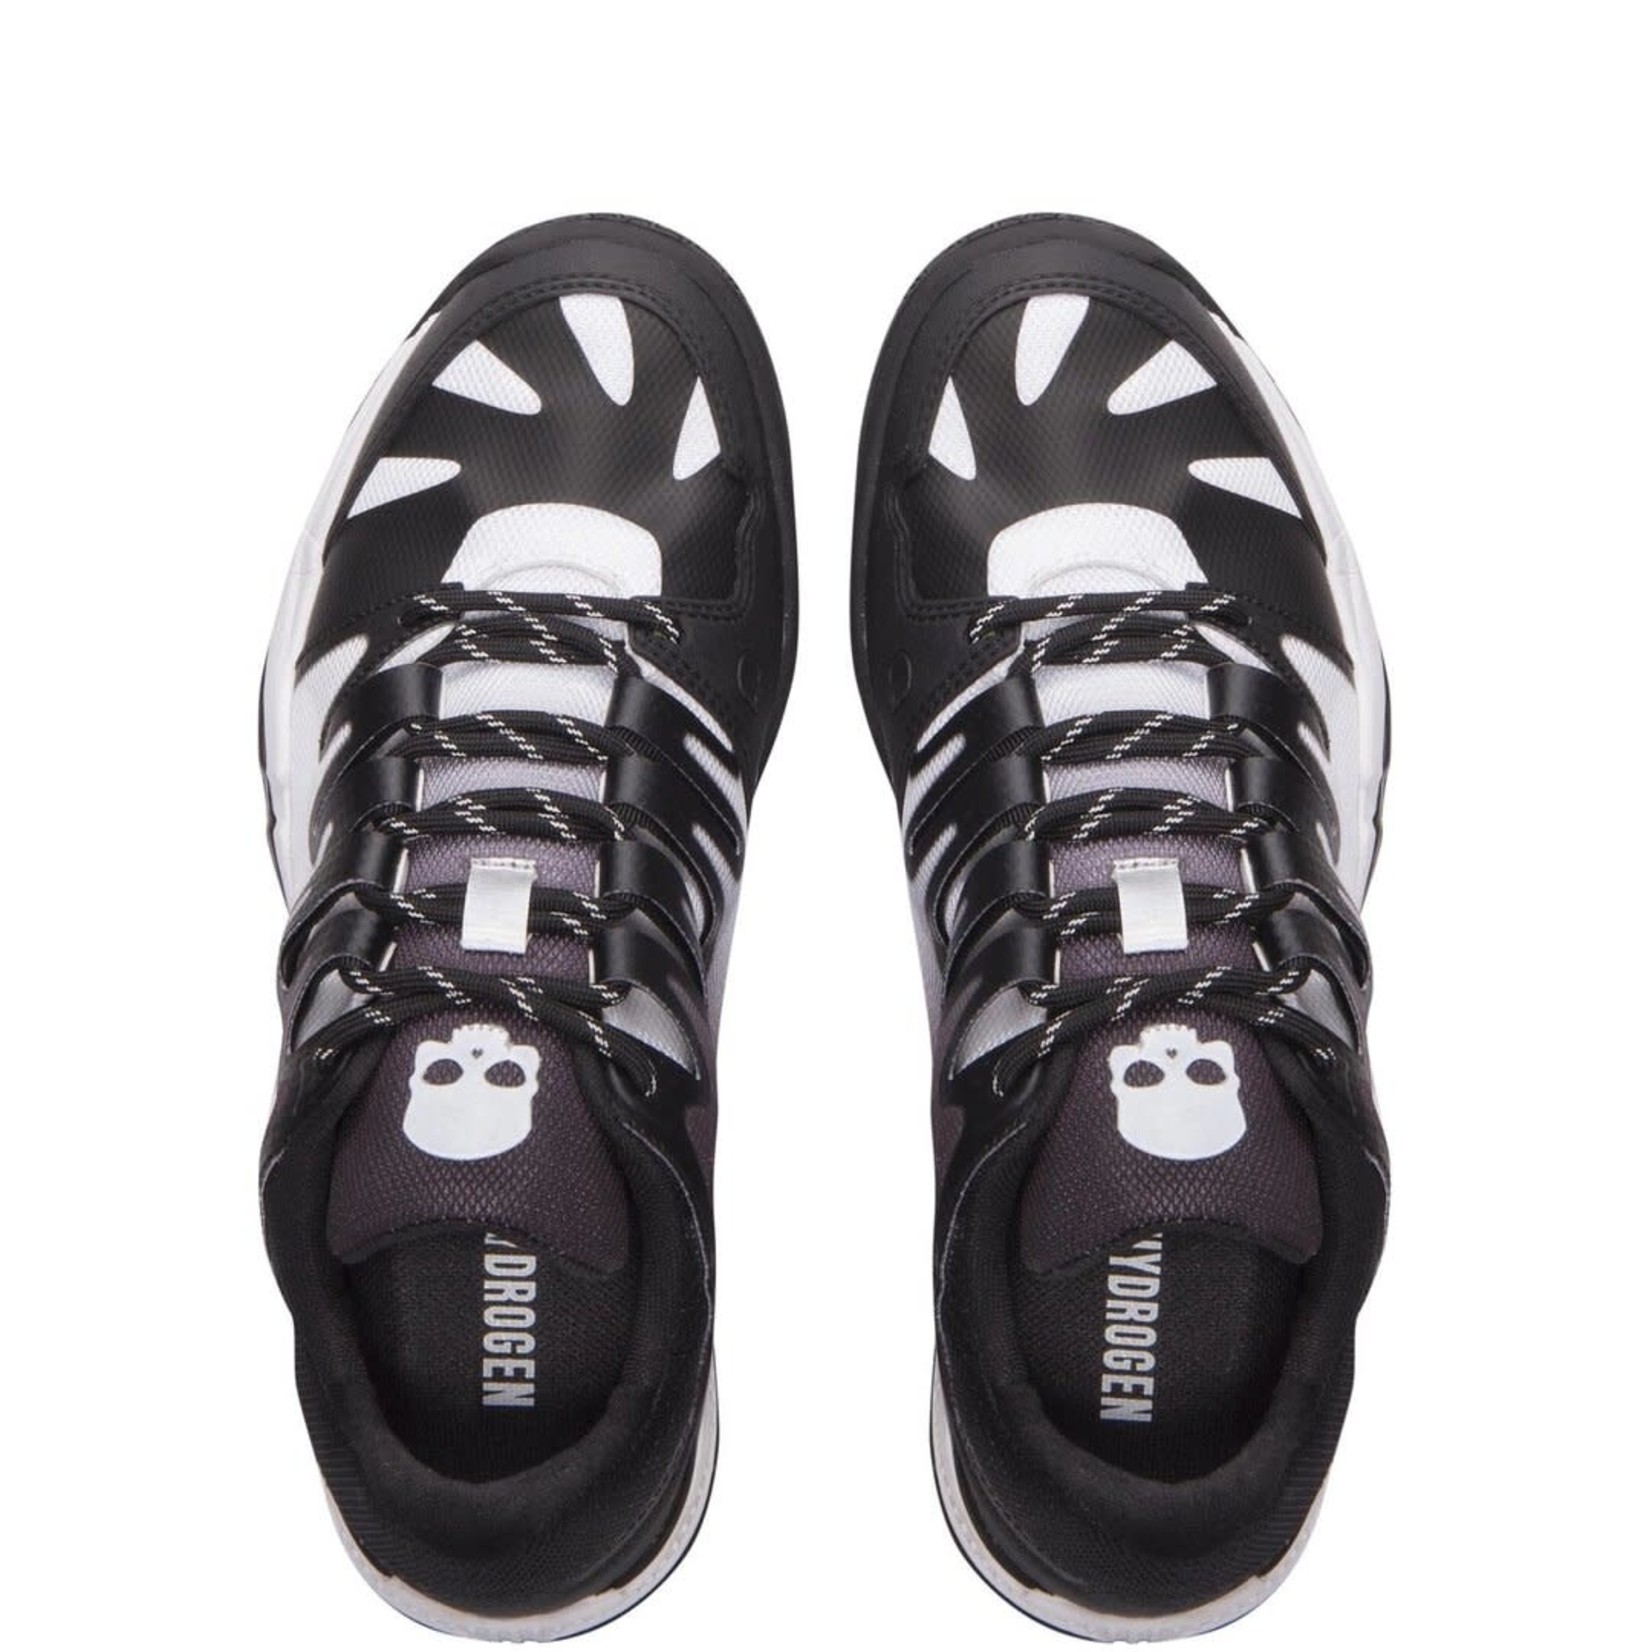 Hydrogen Hydrogen Tennis Shoes (Black)